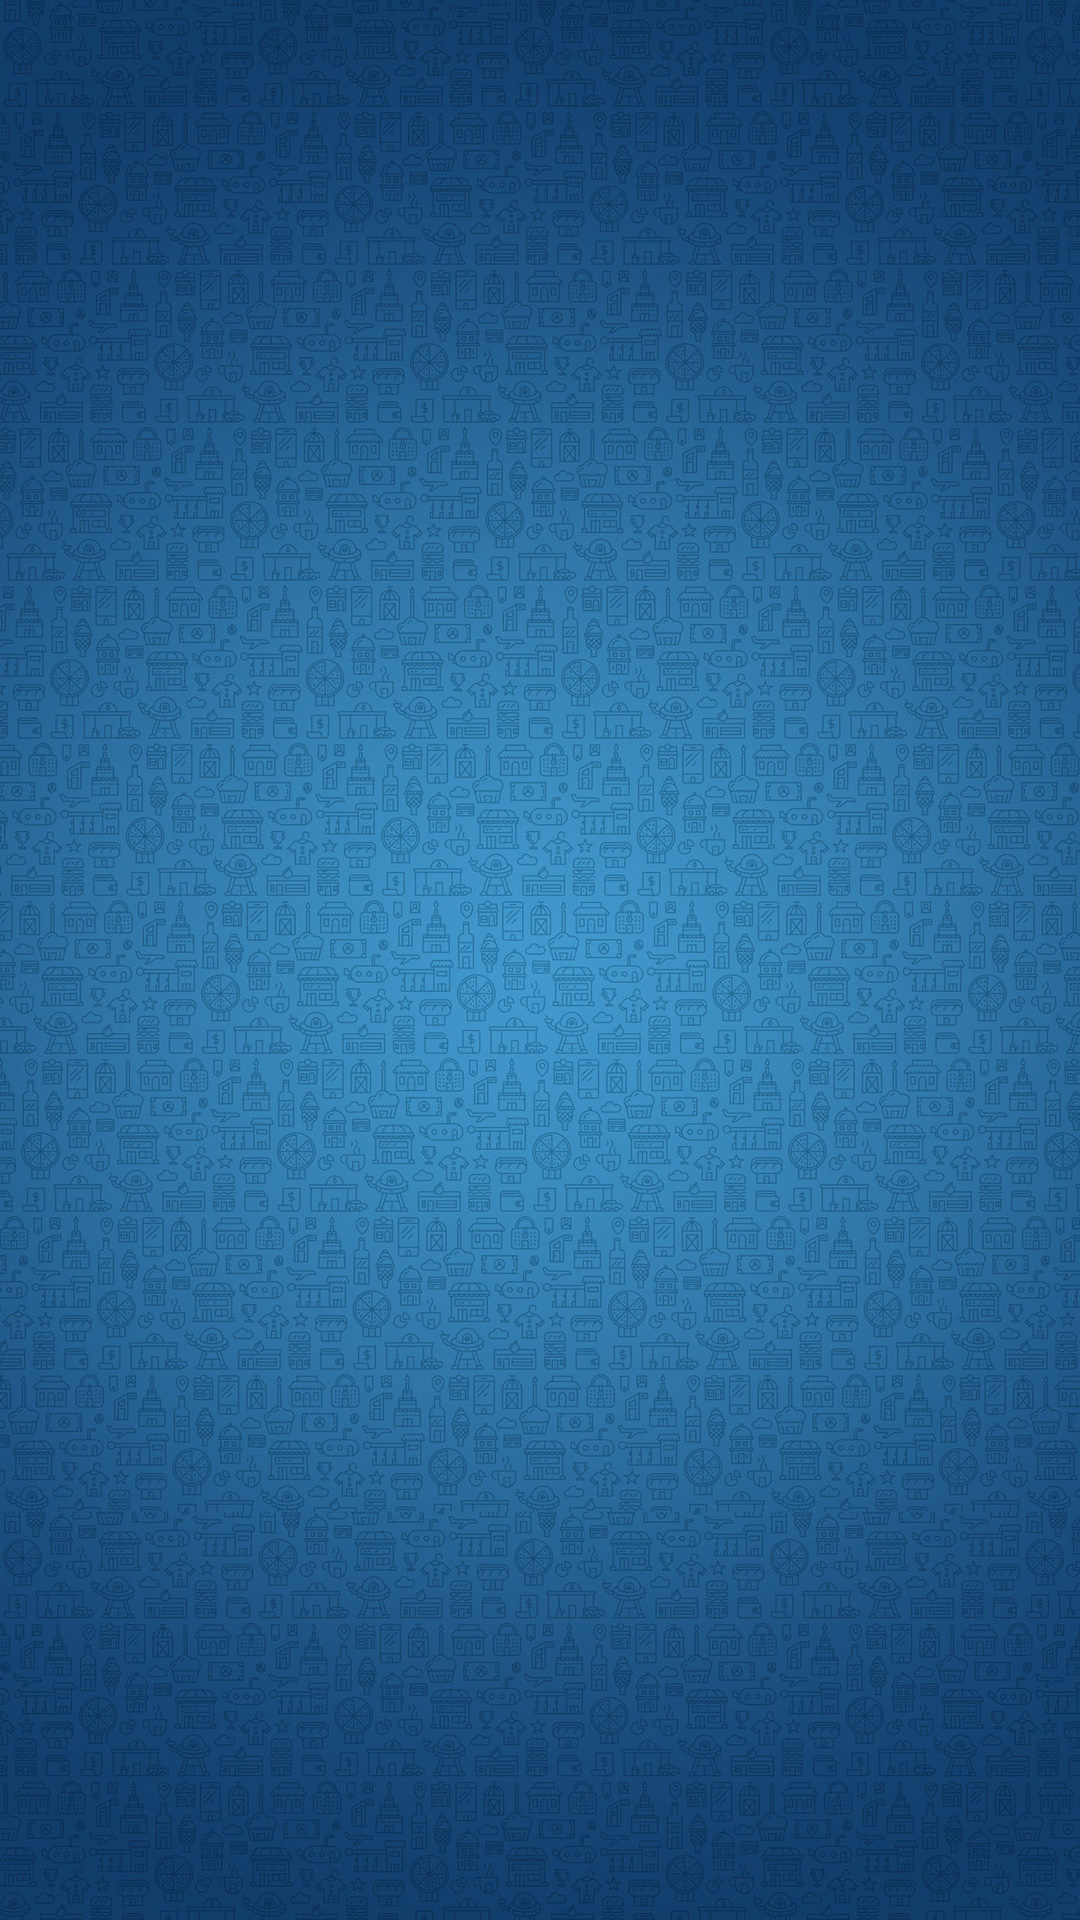 Blue background apple LOGO iPhone 6 Wallpaper | HD iPhone ...